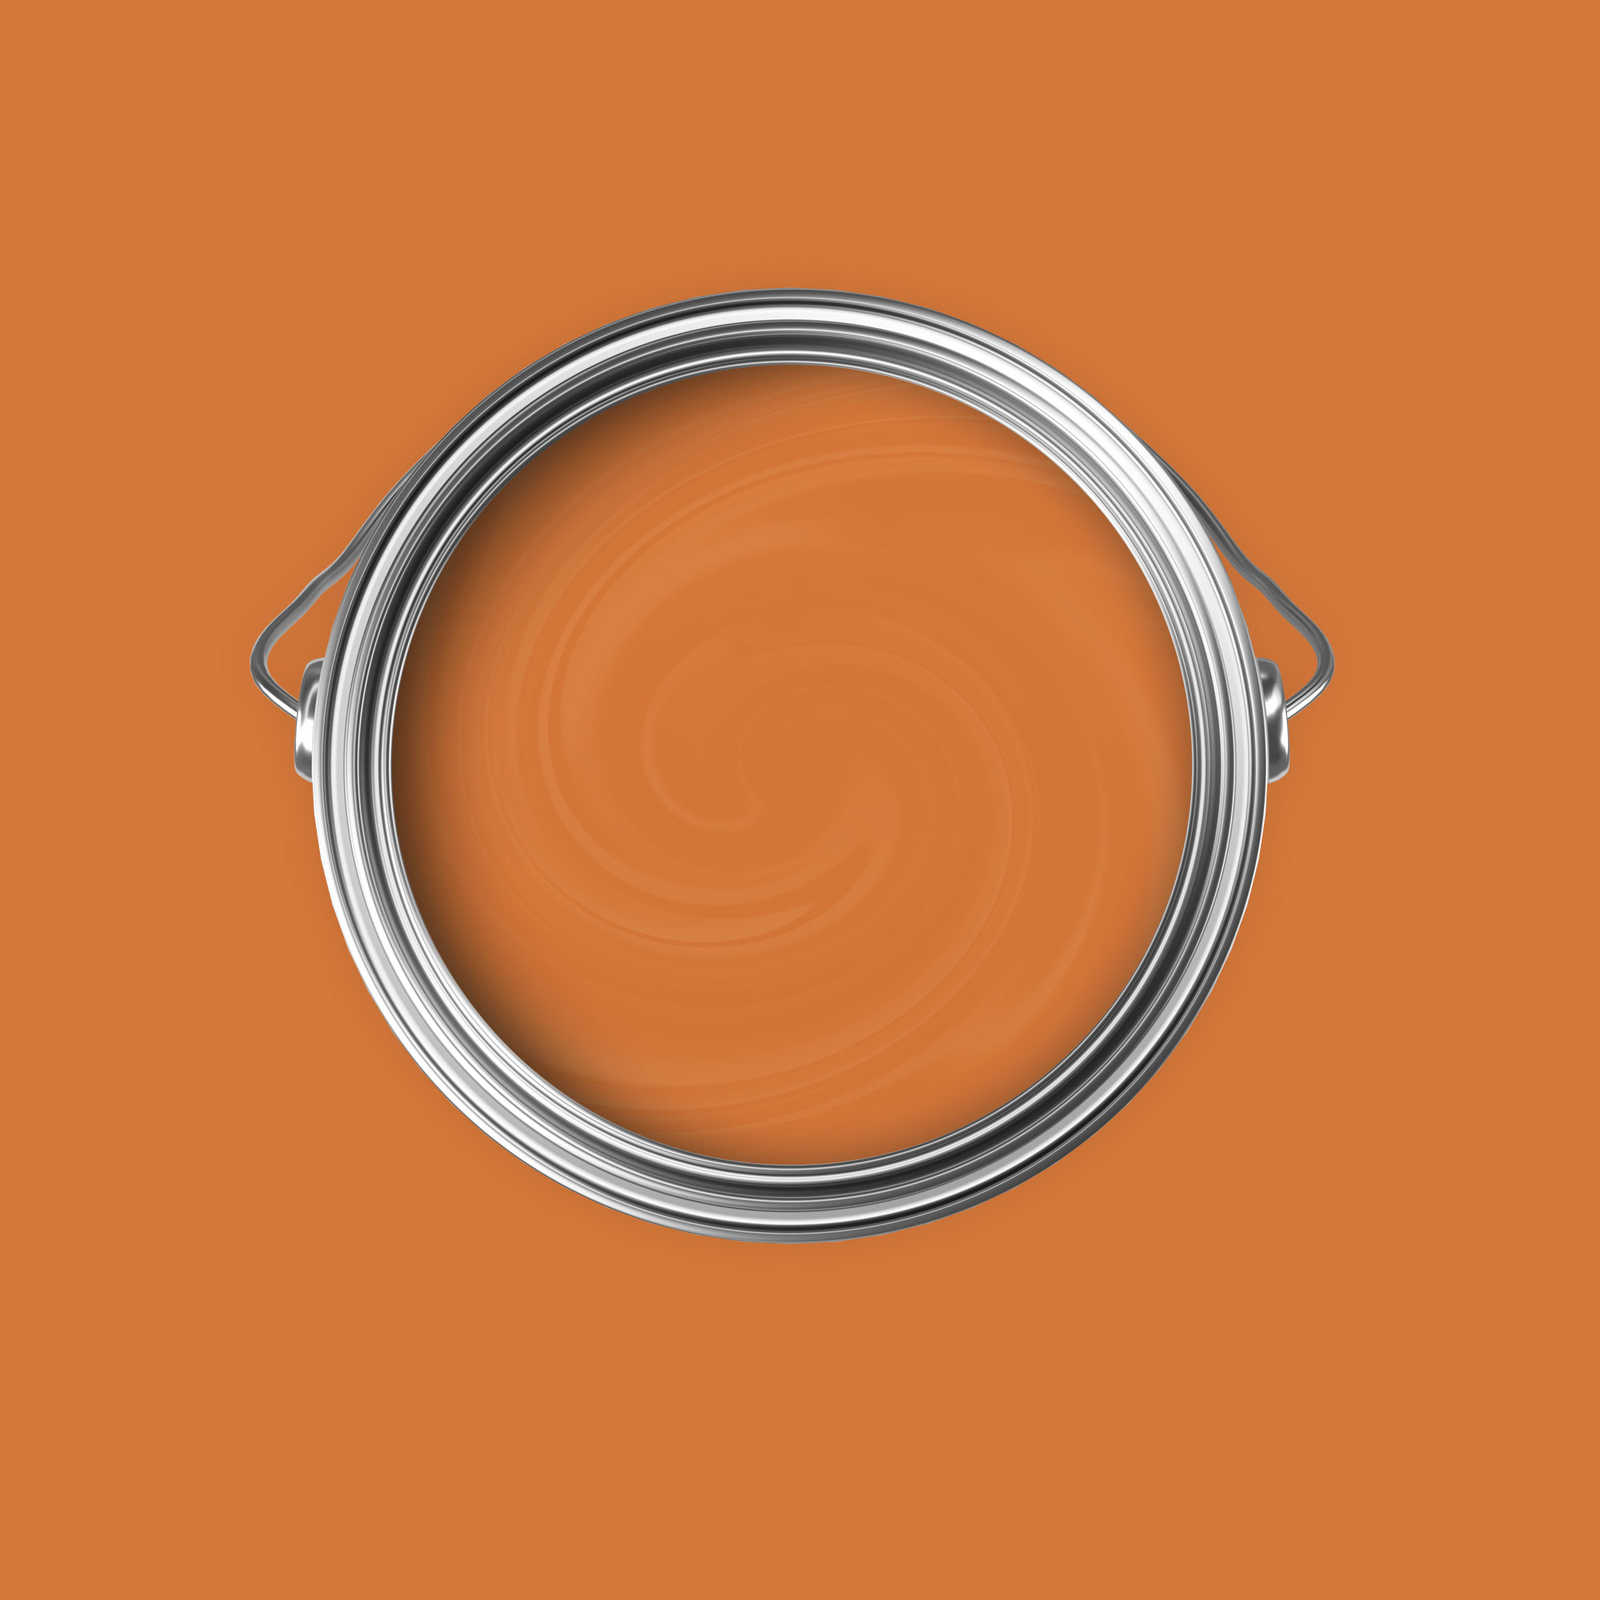             Premium Wall Paint Warm Orange »Pretty Peach« NW903 – 5 litre
        